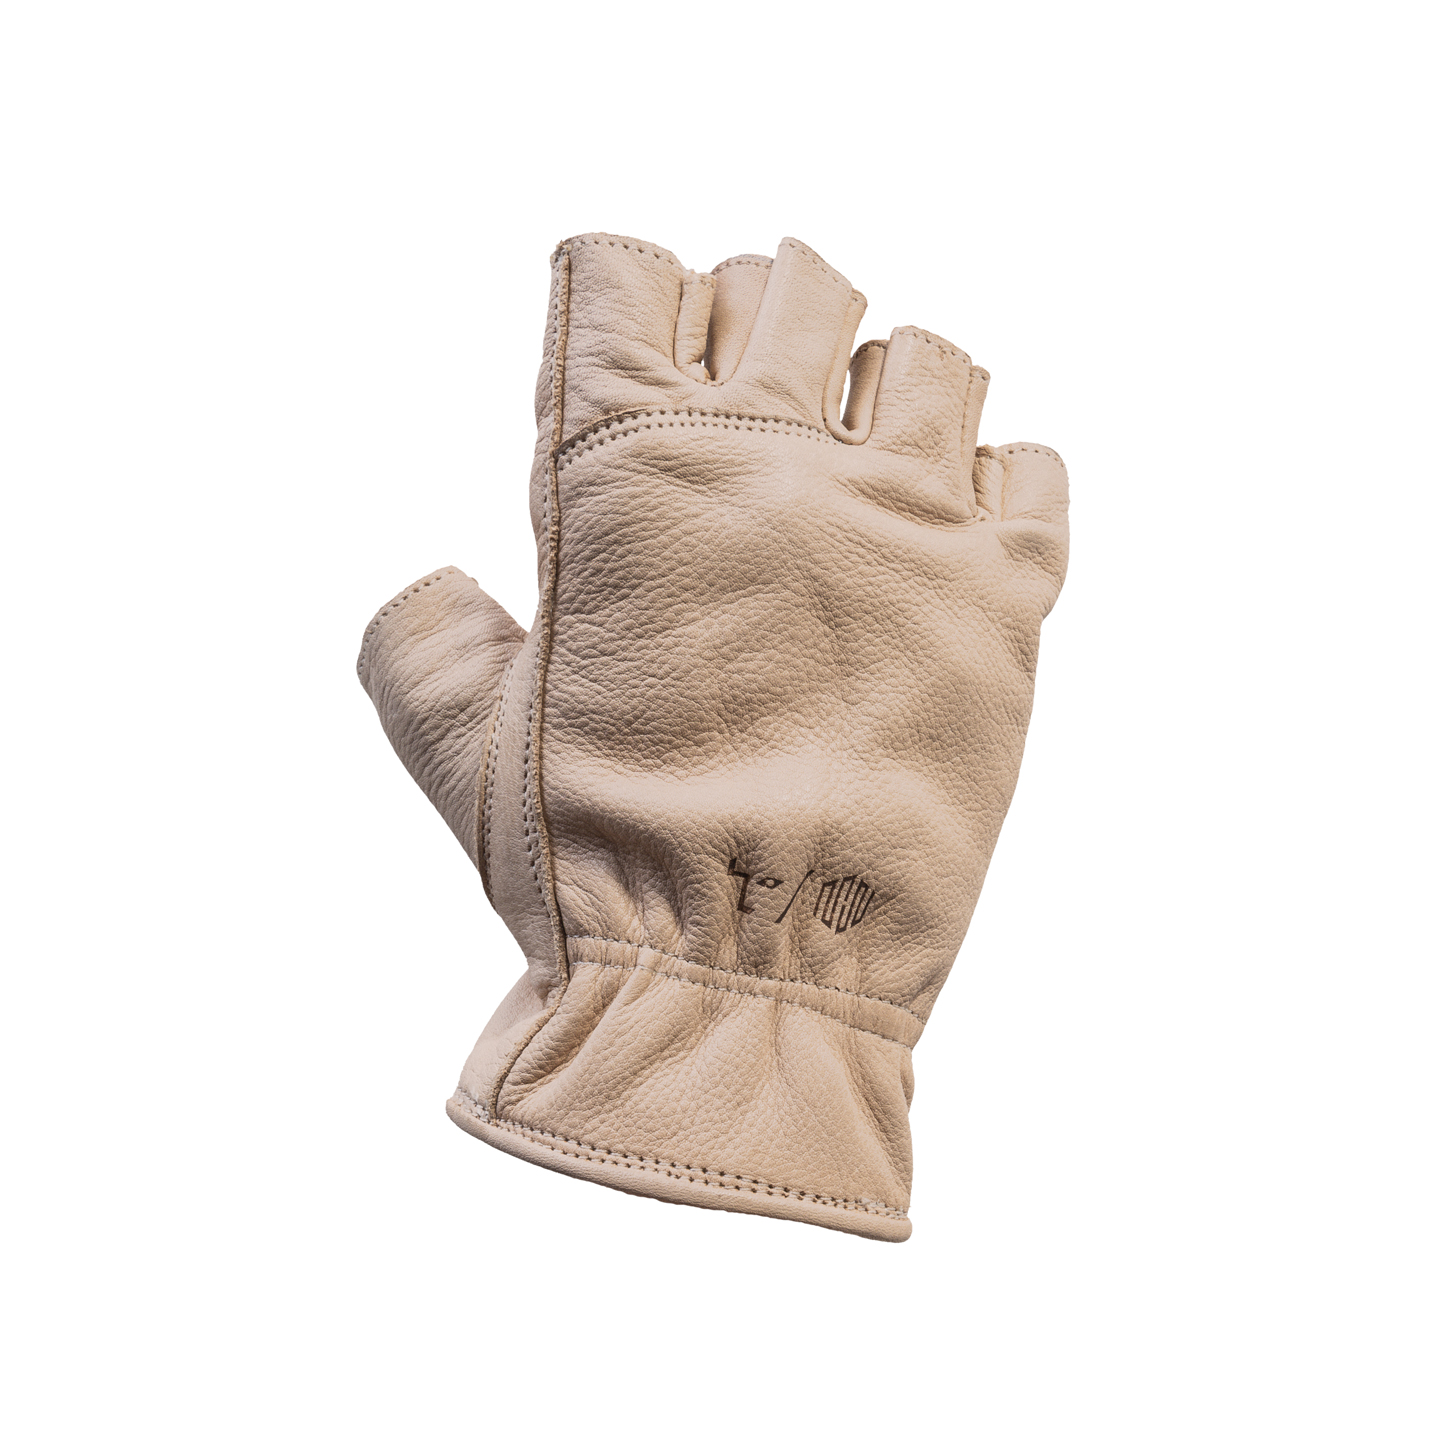 Del Mar Gloves Tan Half